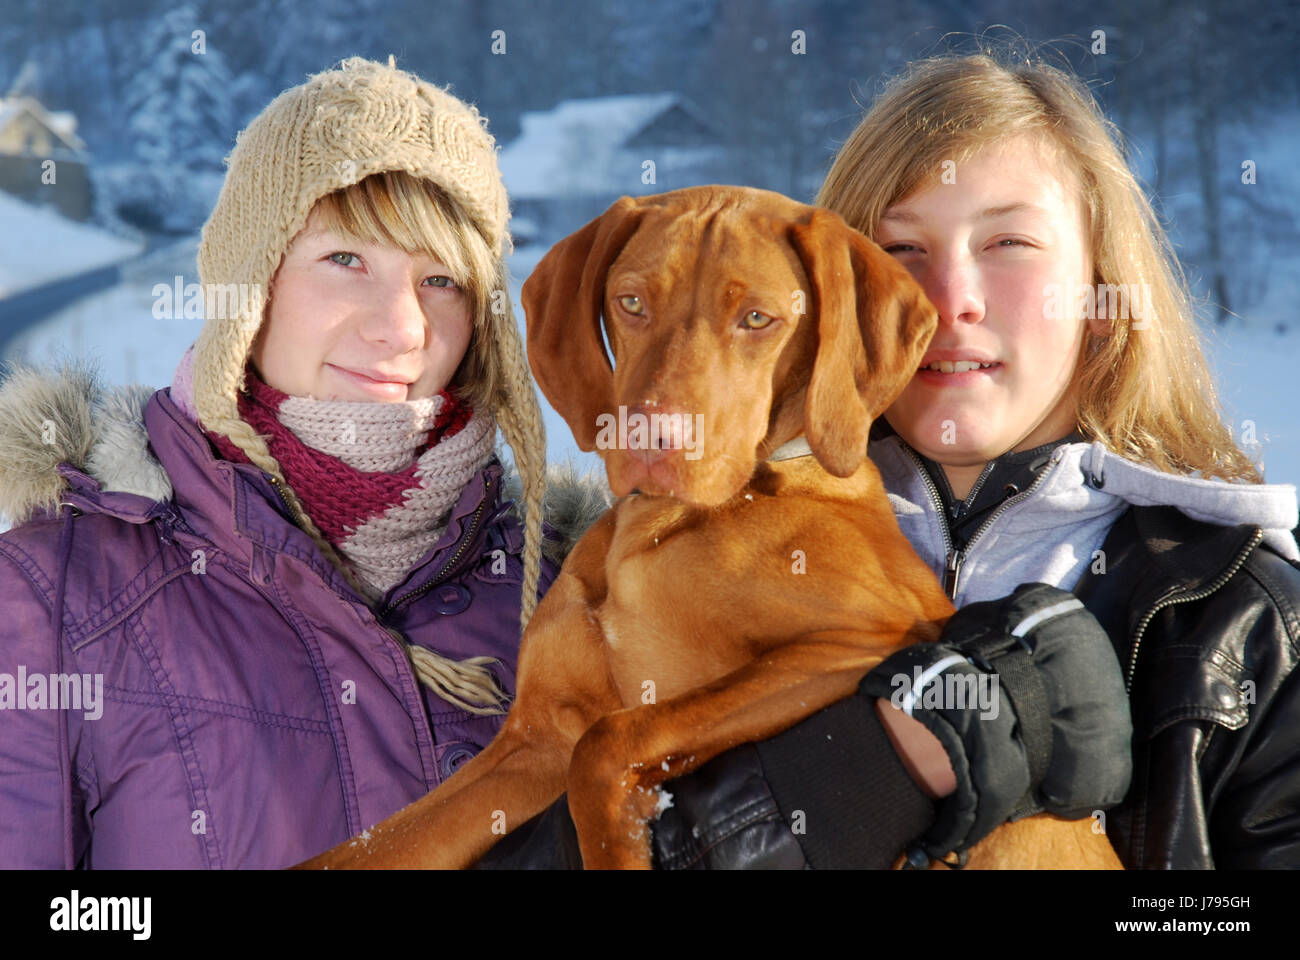 winter portrait Stock Photo